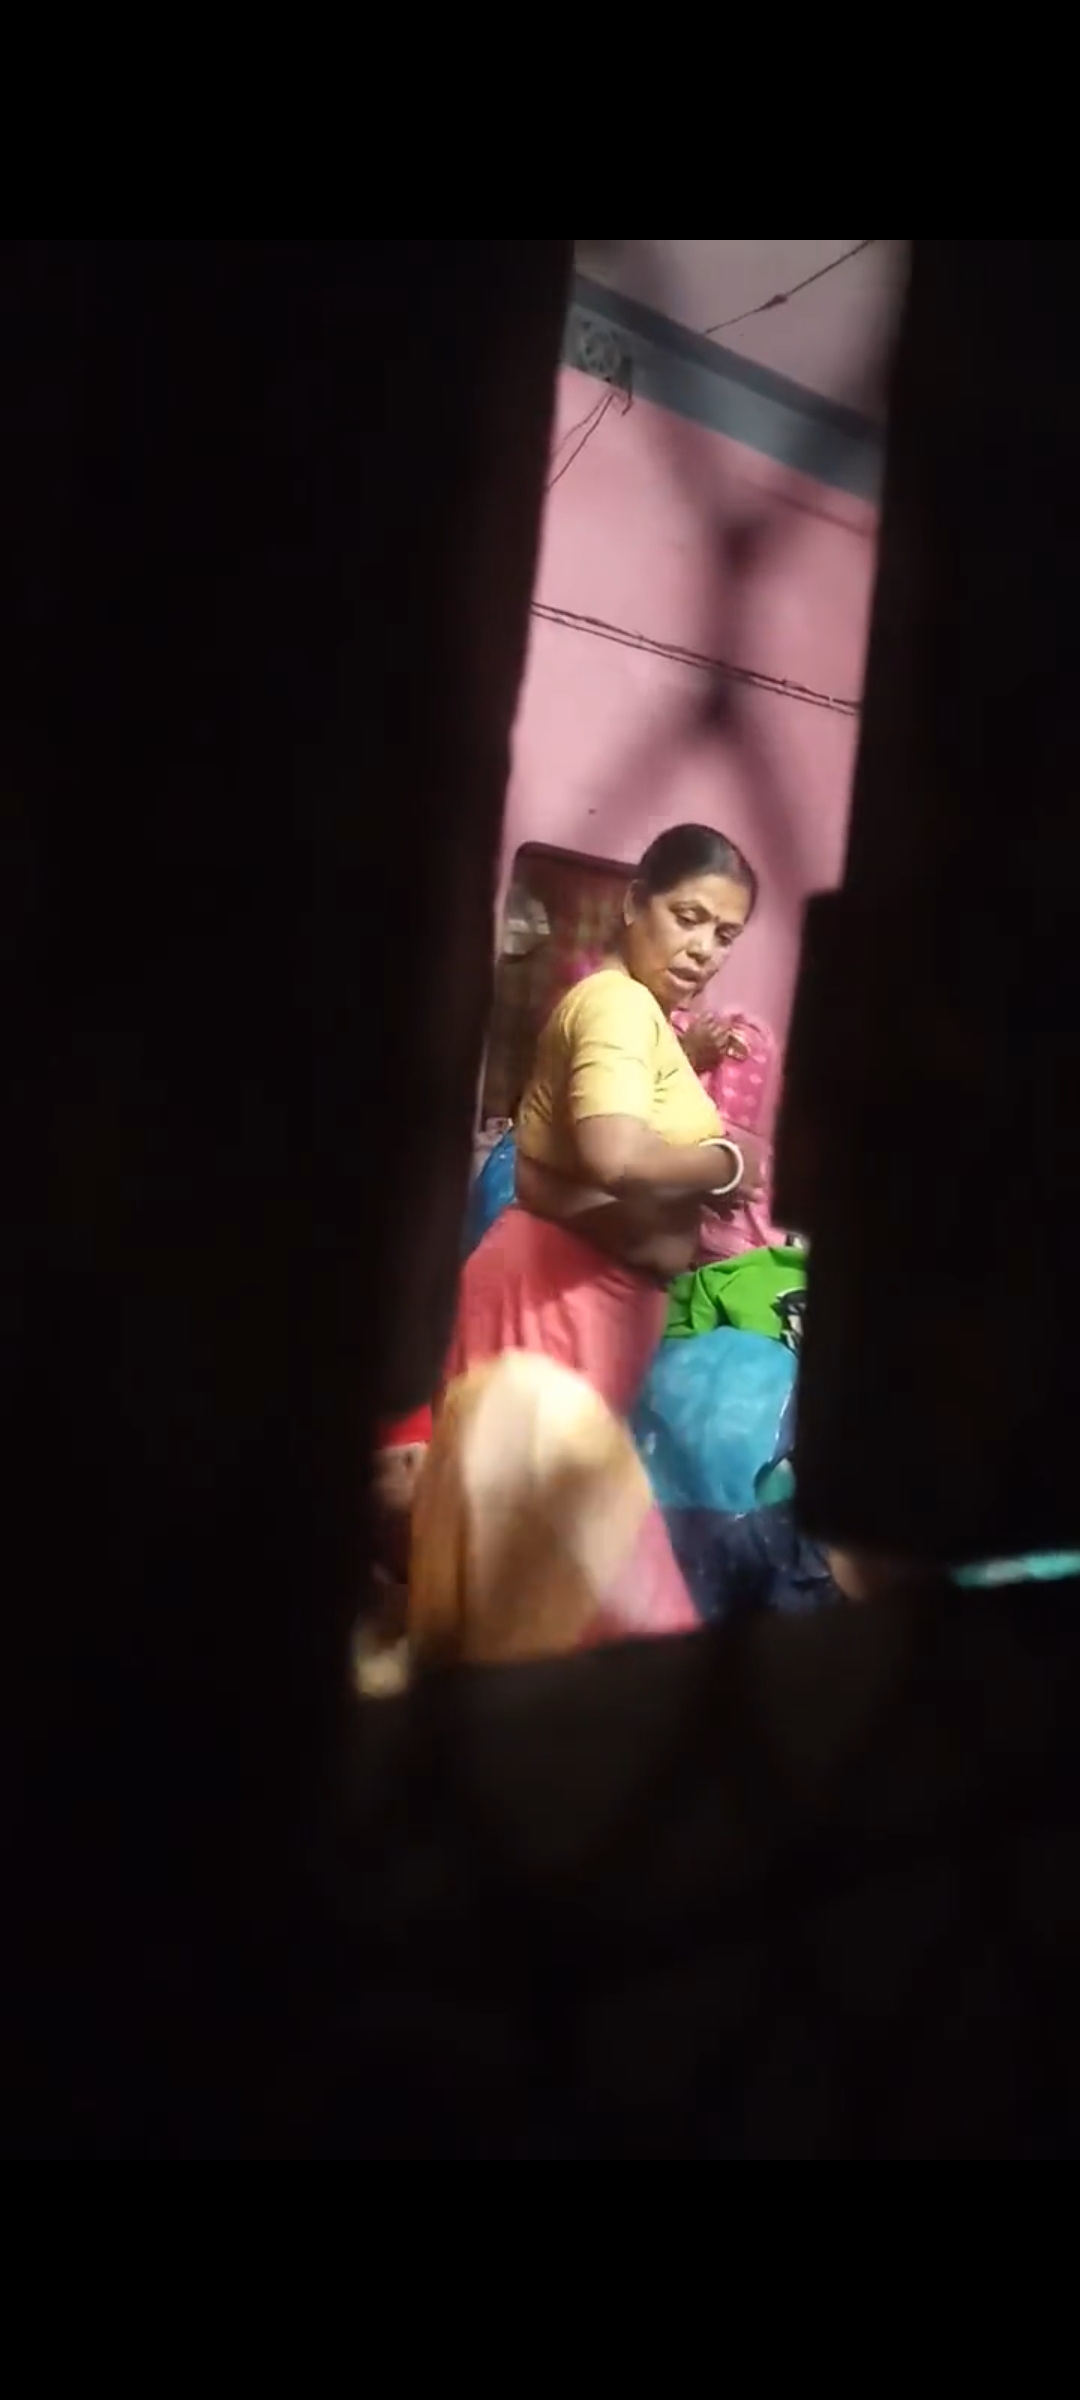 Indian whole family dress change hidden video - ThisVid.com En español